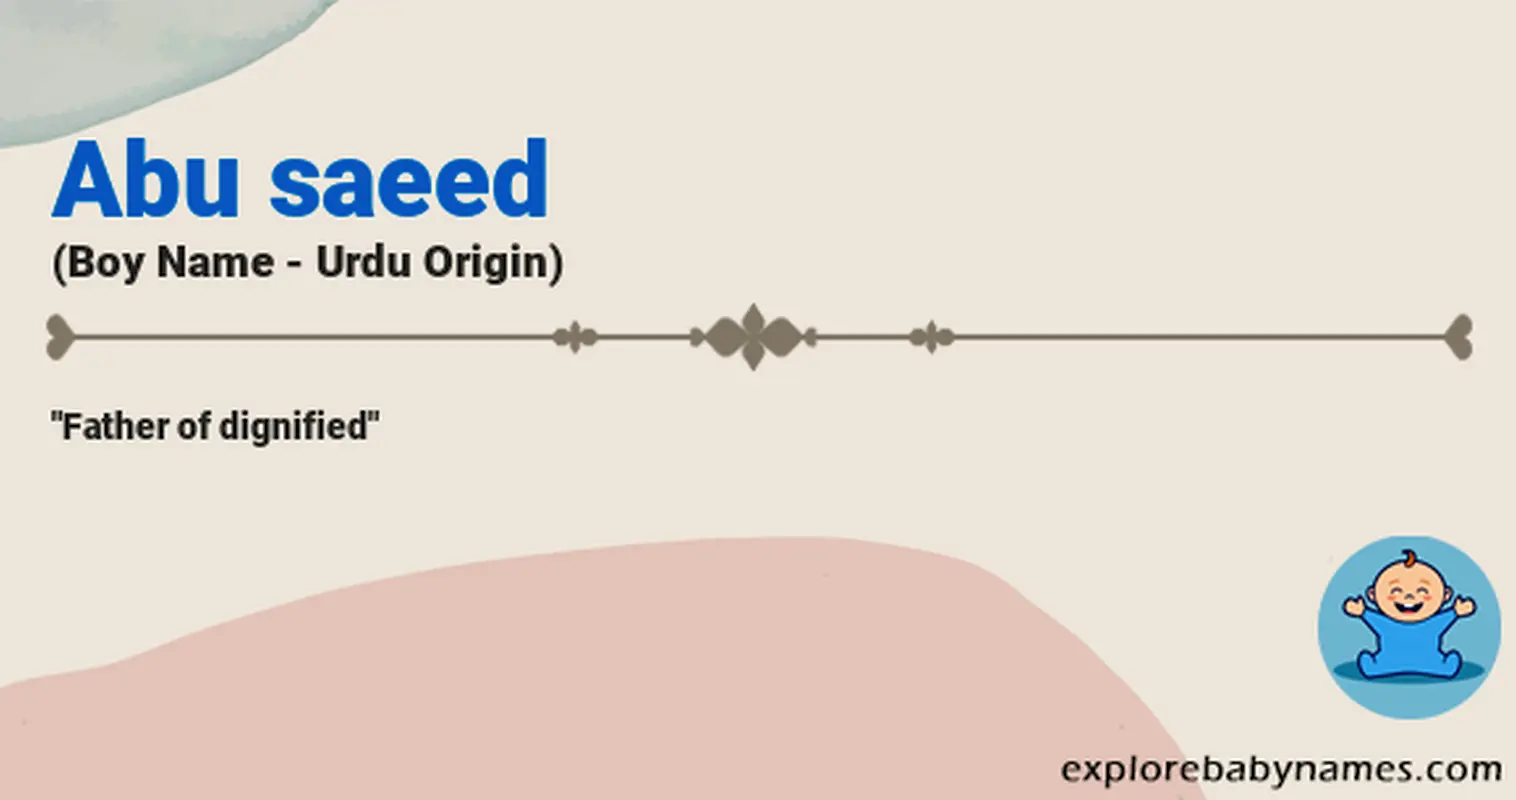 Meaning of Abu saeed